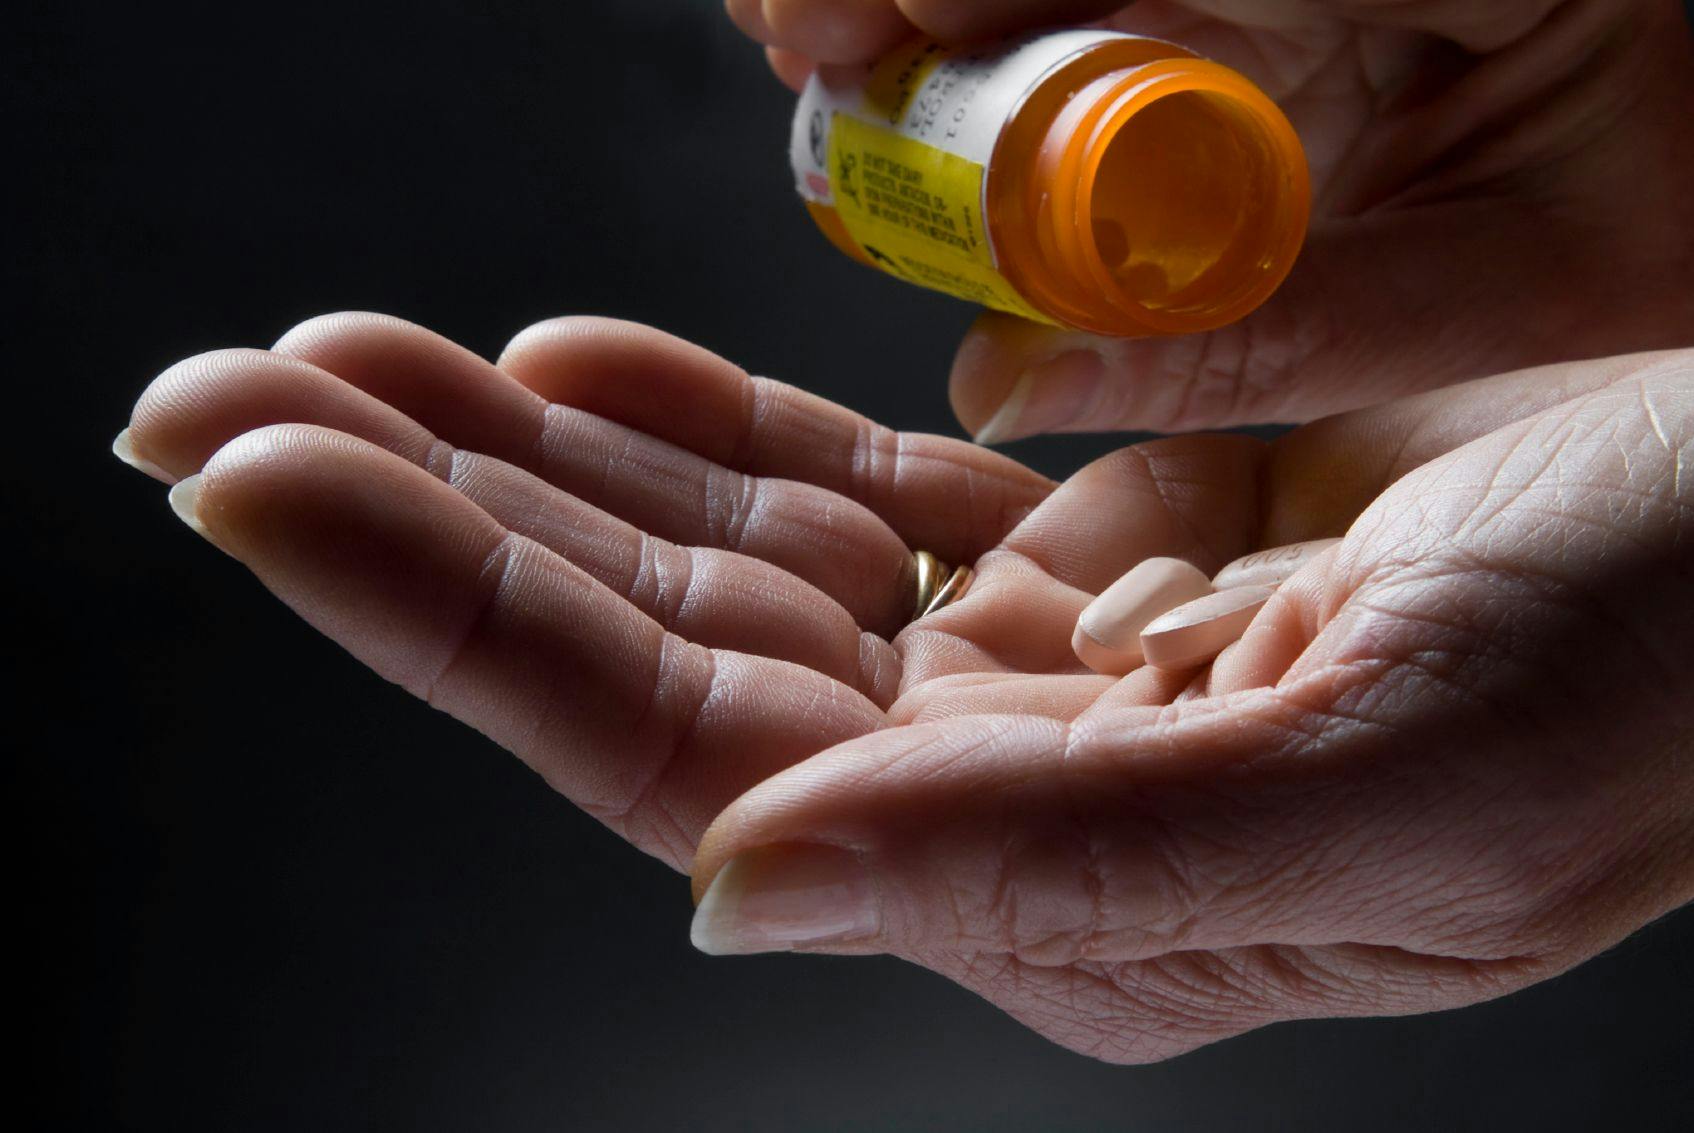 empyting pills into a hand